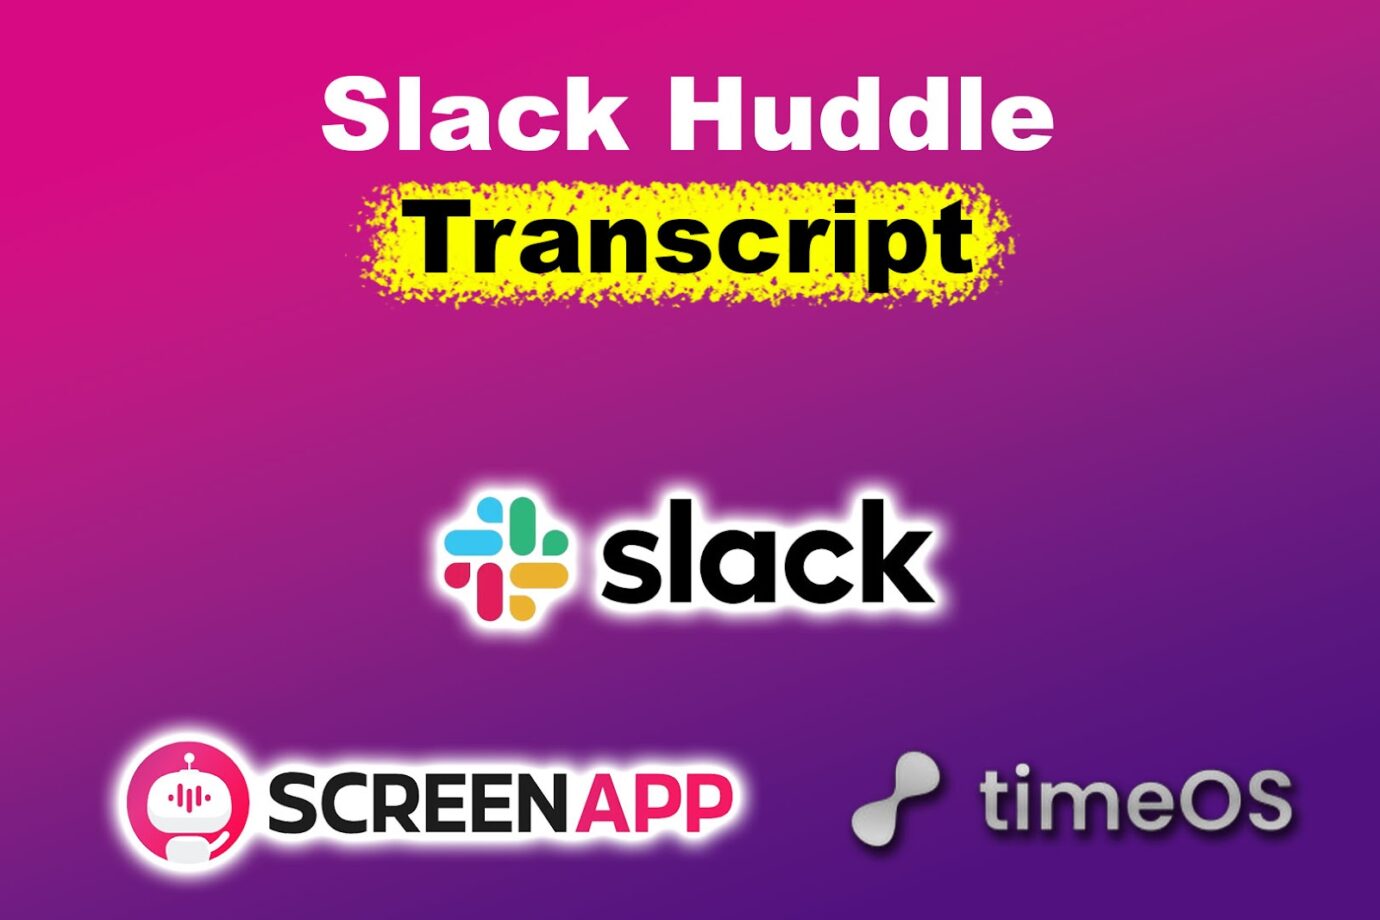 How to Get a Slack Huddle Transcript